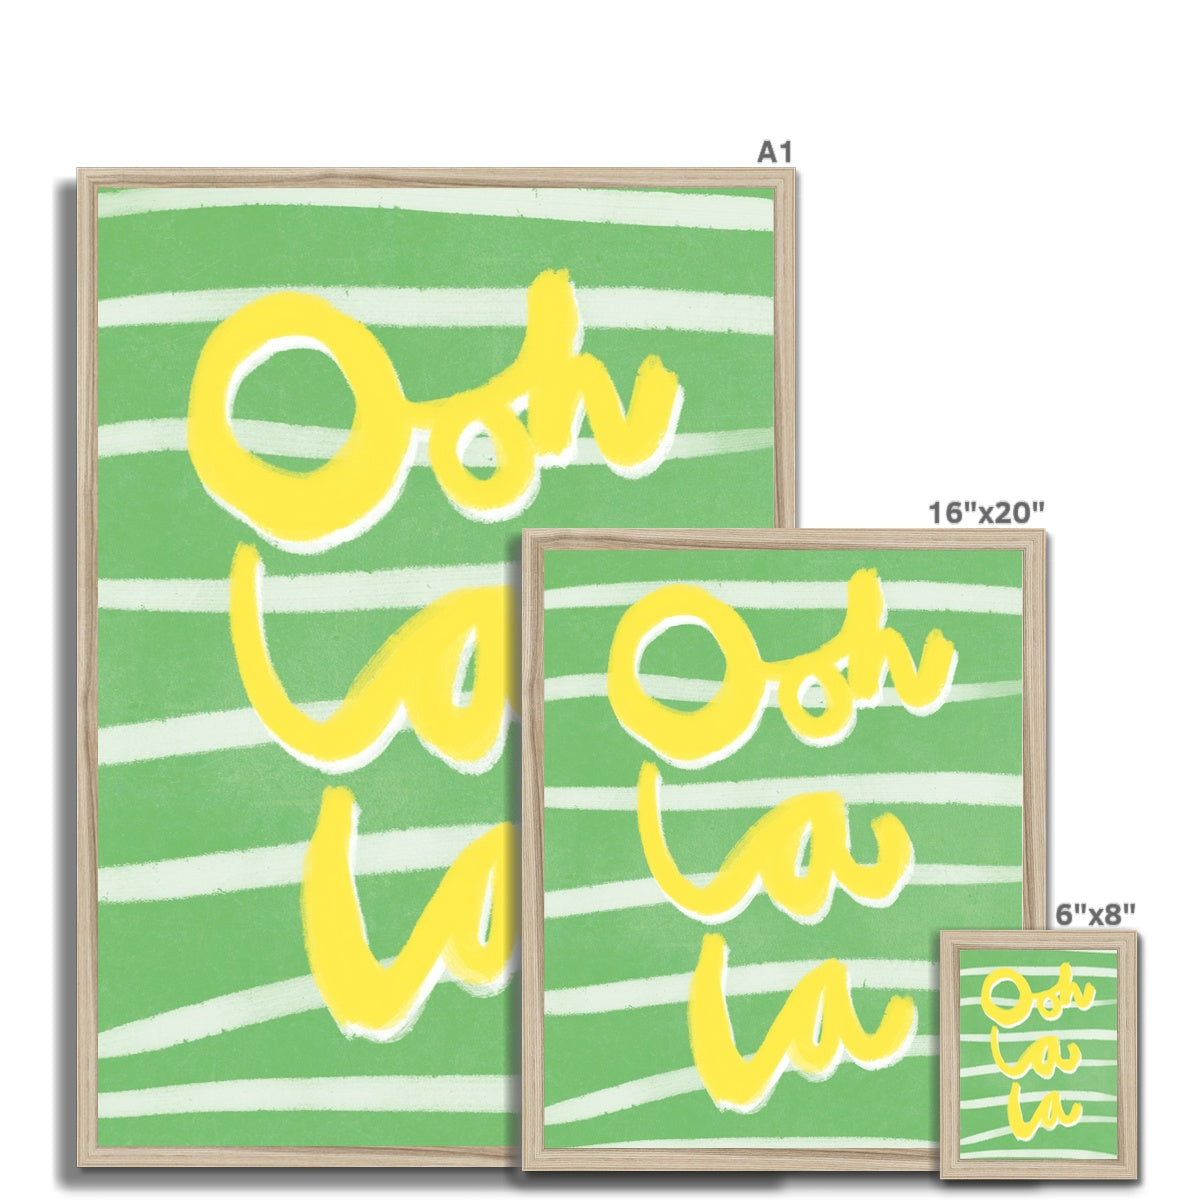 Ooh La La Art Print - Green, Yellow and White Framed Print